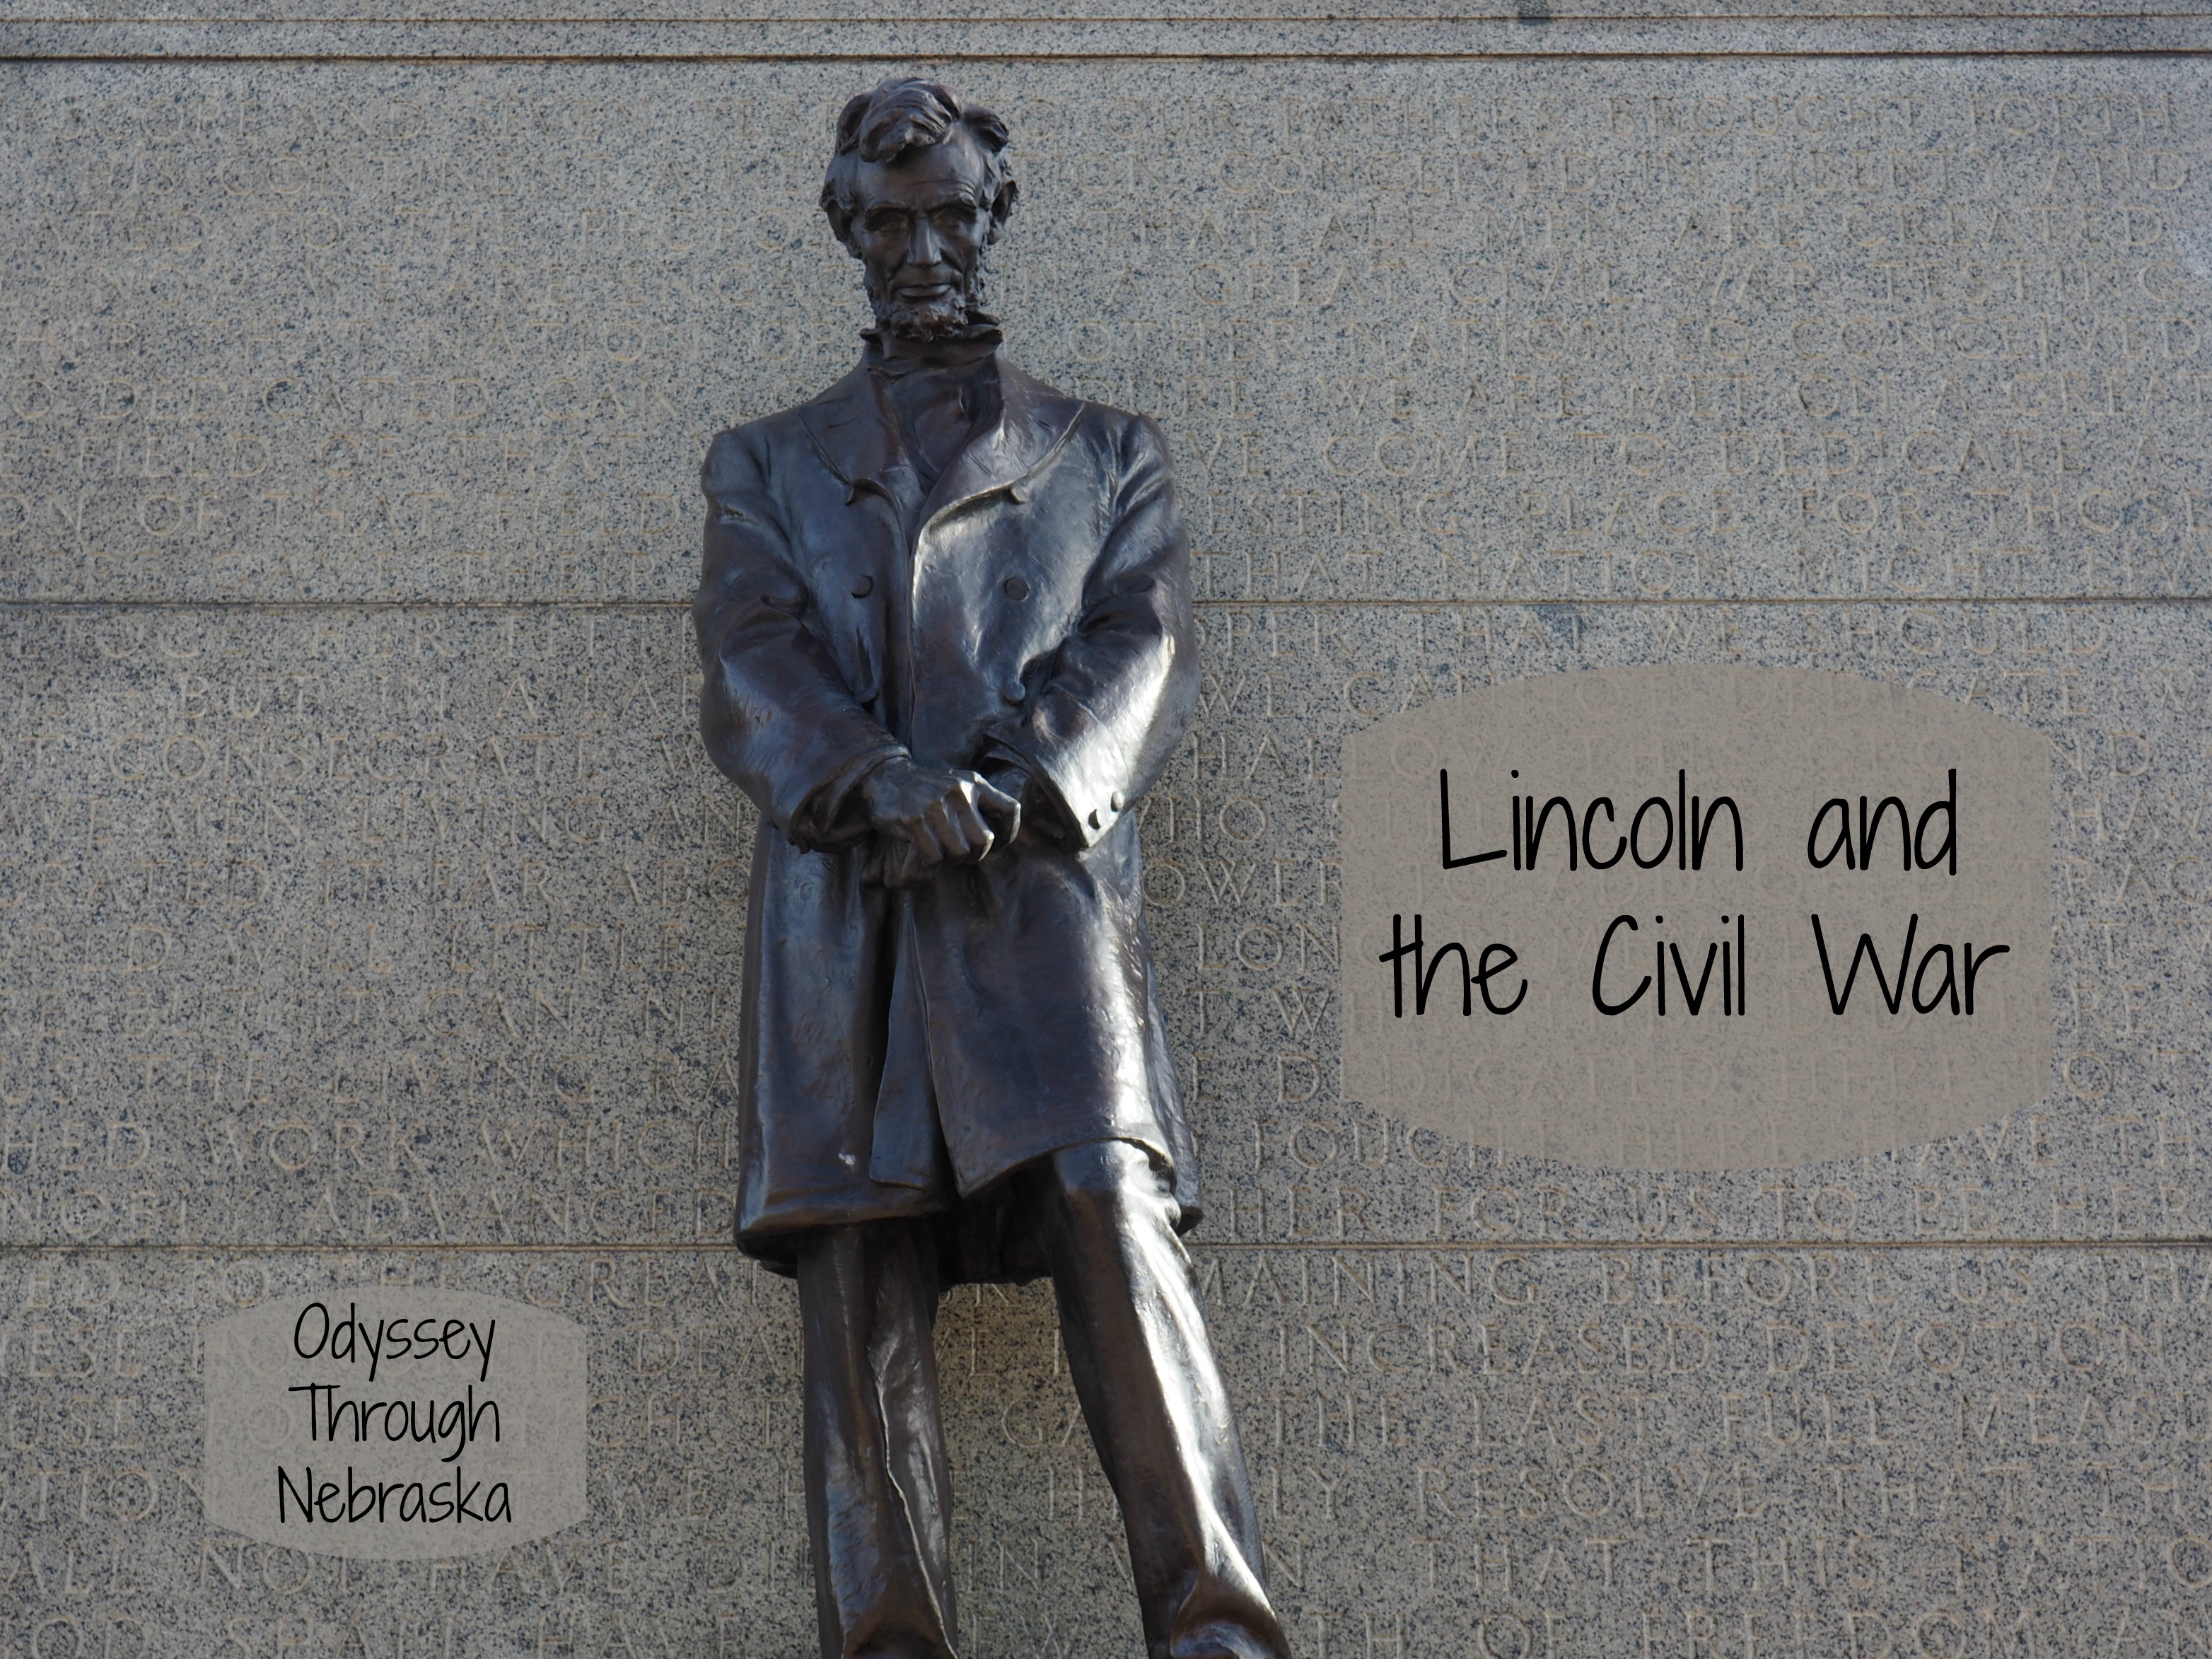 The Civil War did affect Lincoln and Nebraska